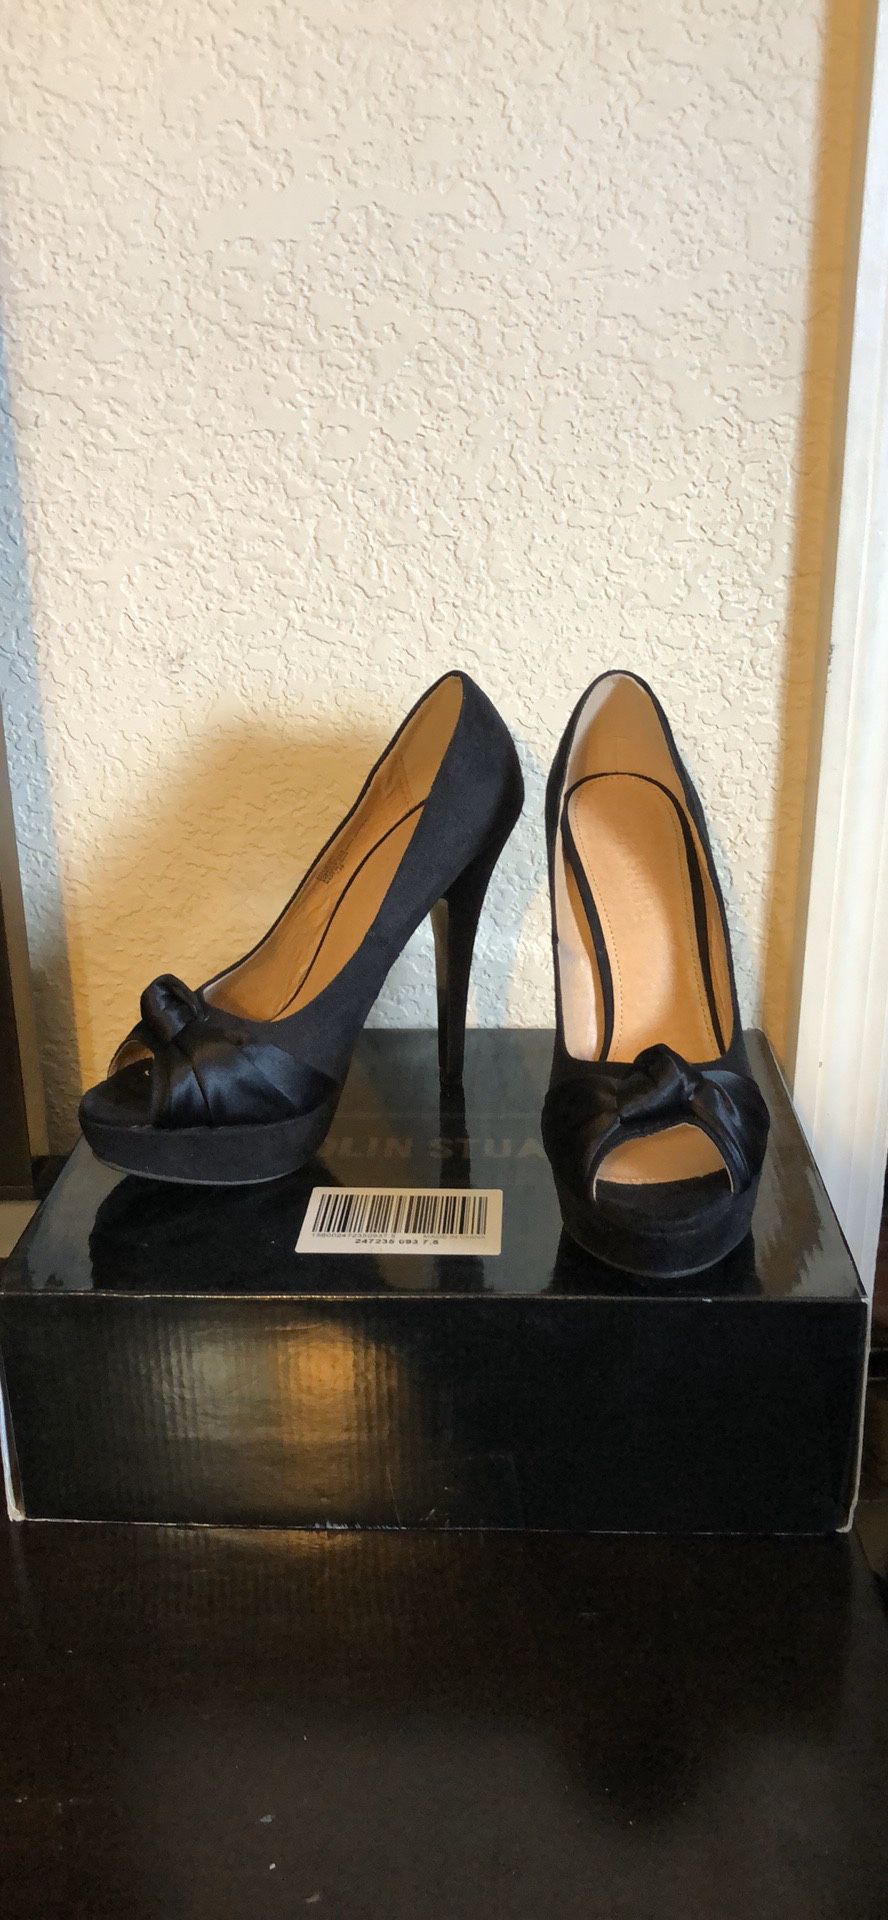 Black heels size 7.5